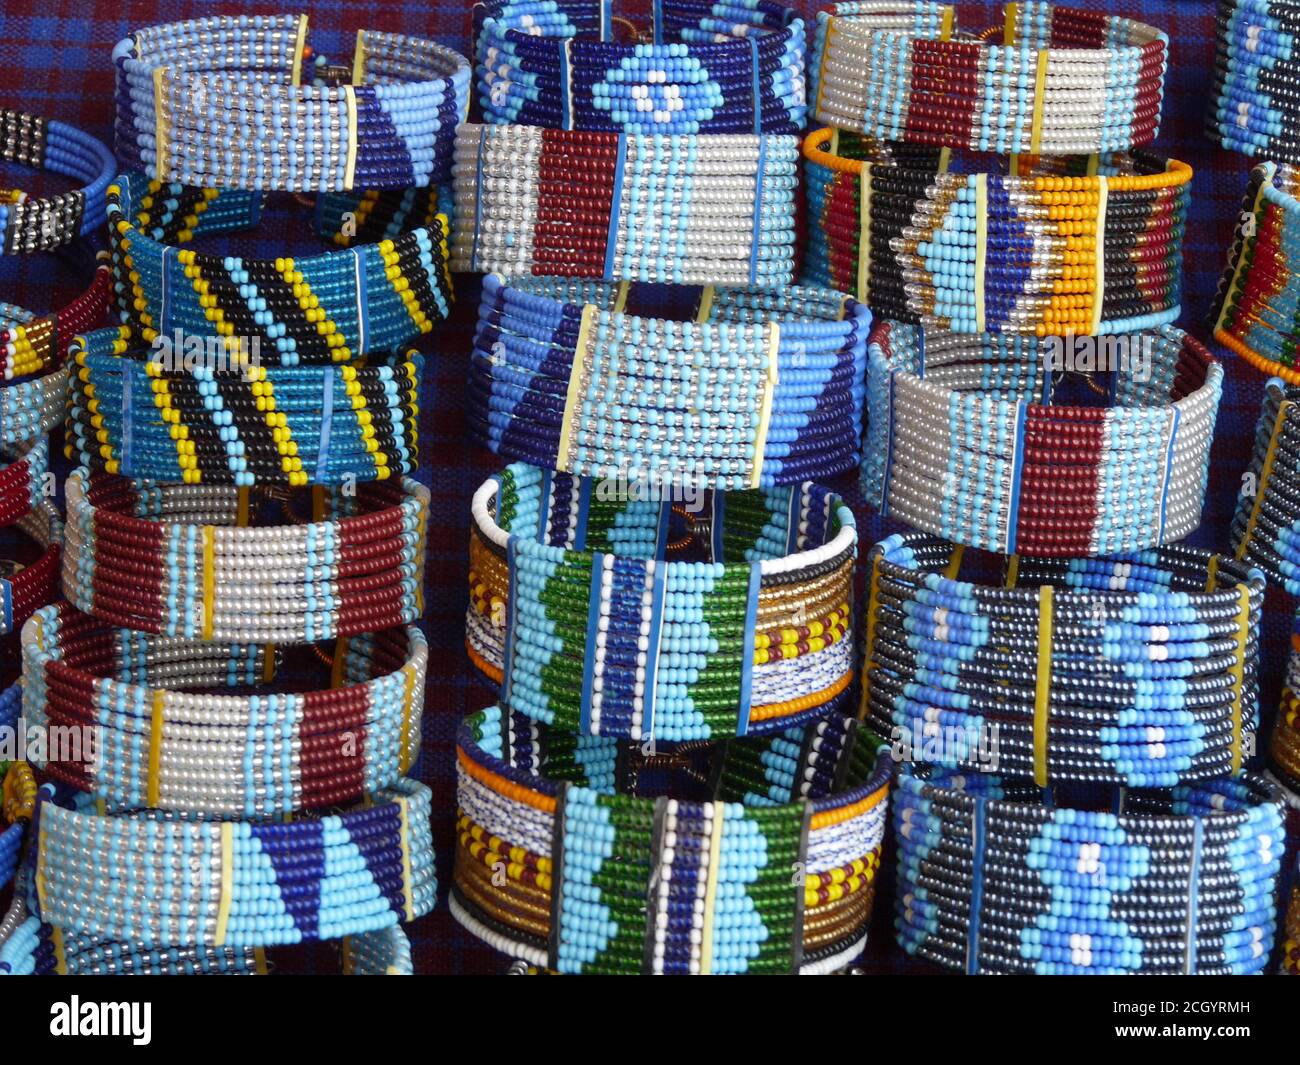 Close up display of colourful handmade Masai bracelets on sale, Kenya Stock Photo